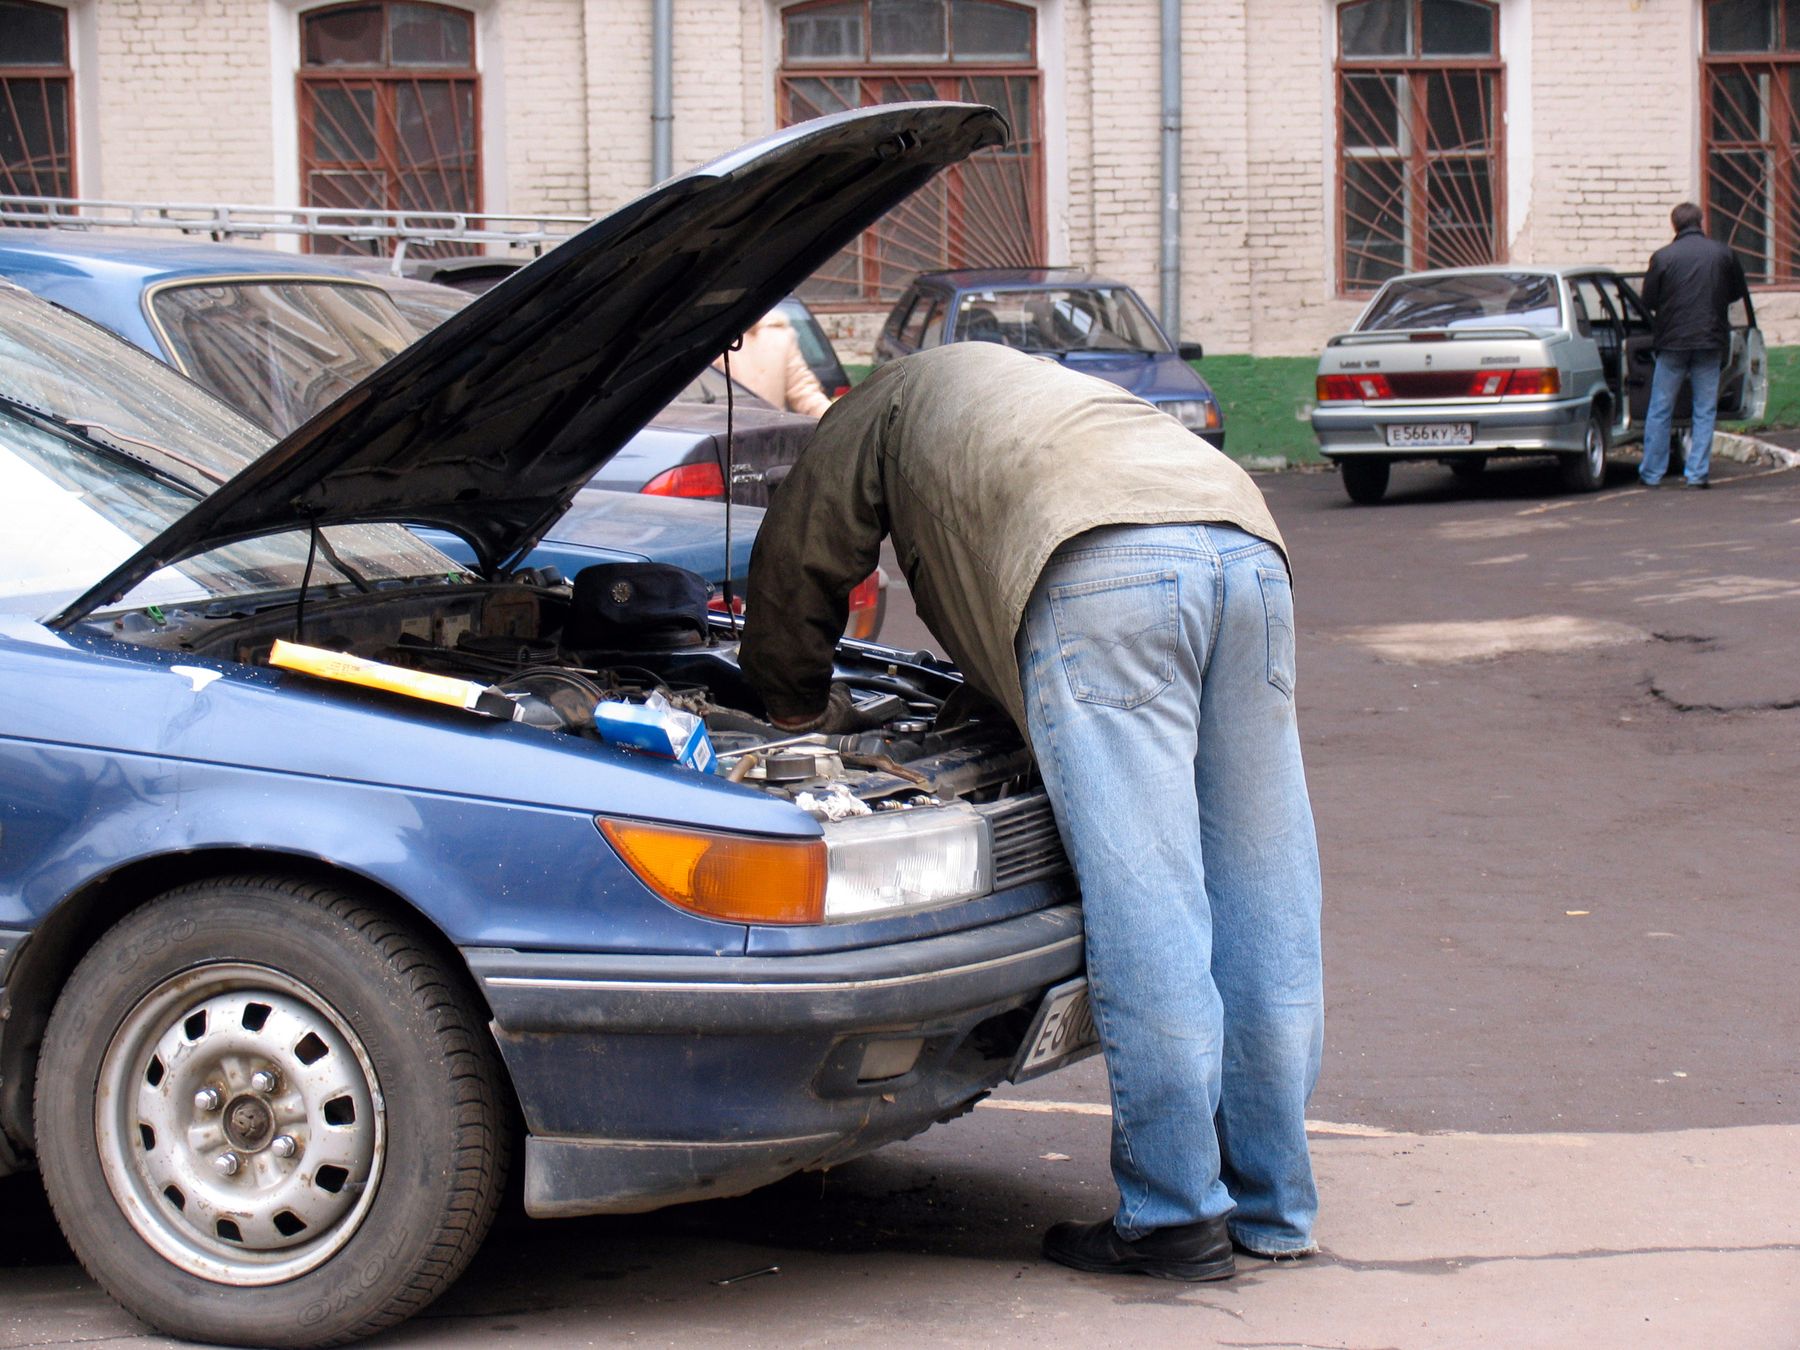 Видео чинит машину. Человек чинит машину. Мужчина ремонтирует машину. Мужчина чинит машину. Мужик чинит тачку.